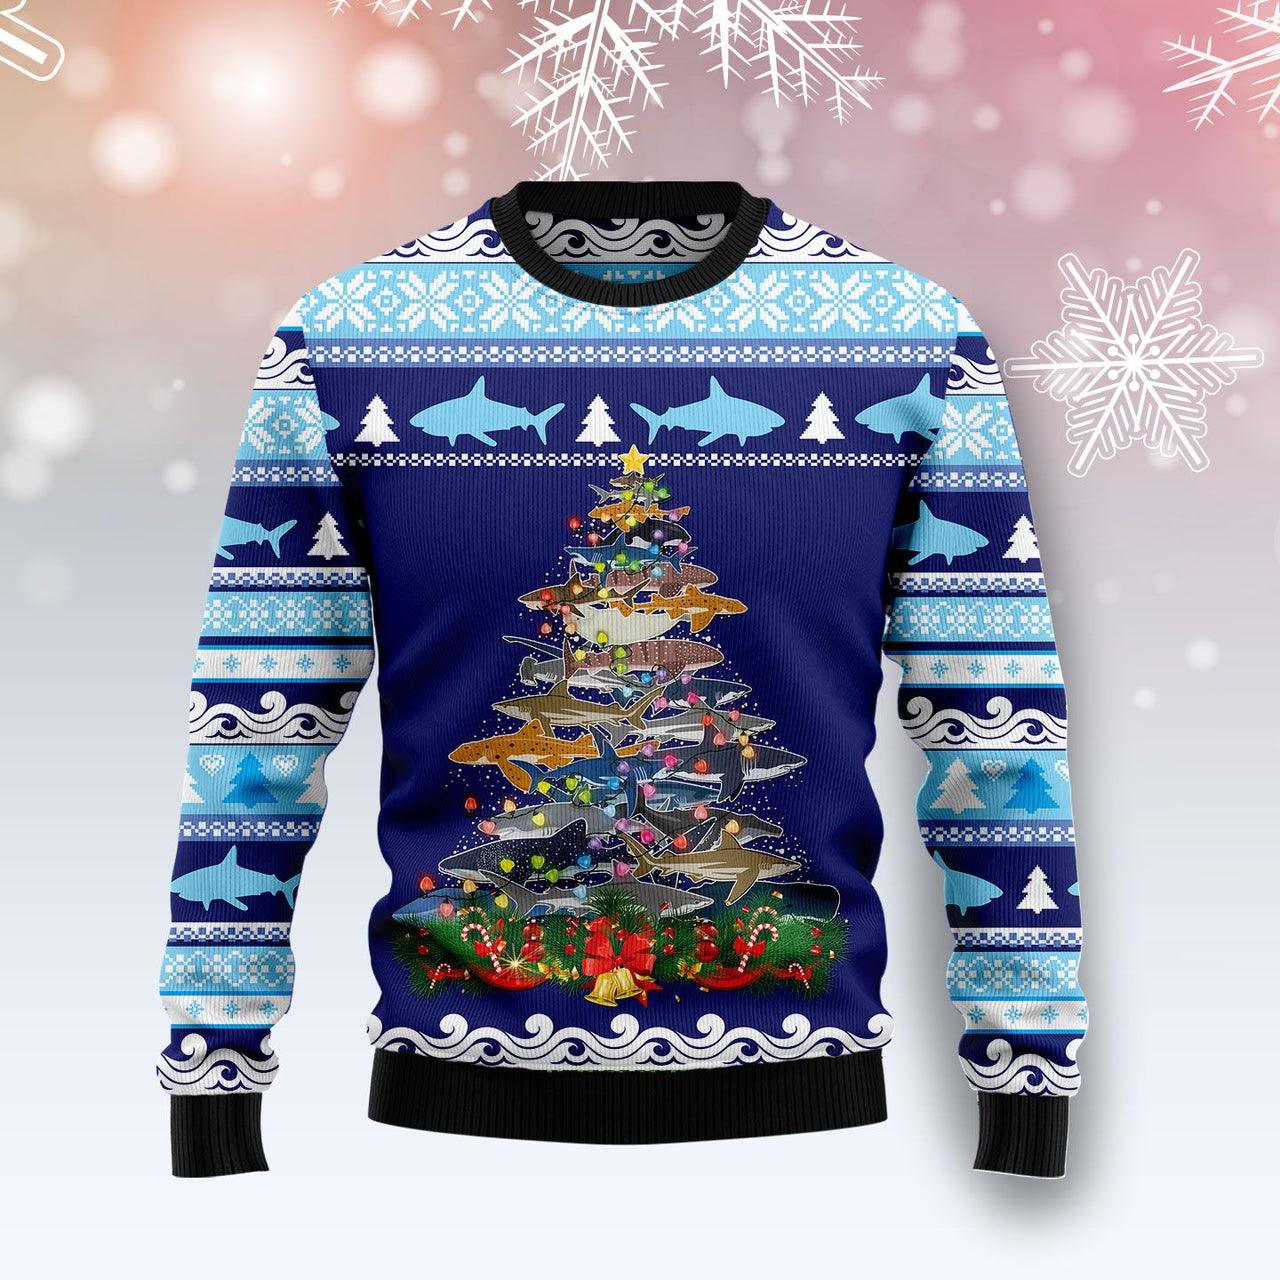 Lights Christmas Tree Santa Shark Ugly Sweater - Santa Joker